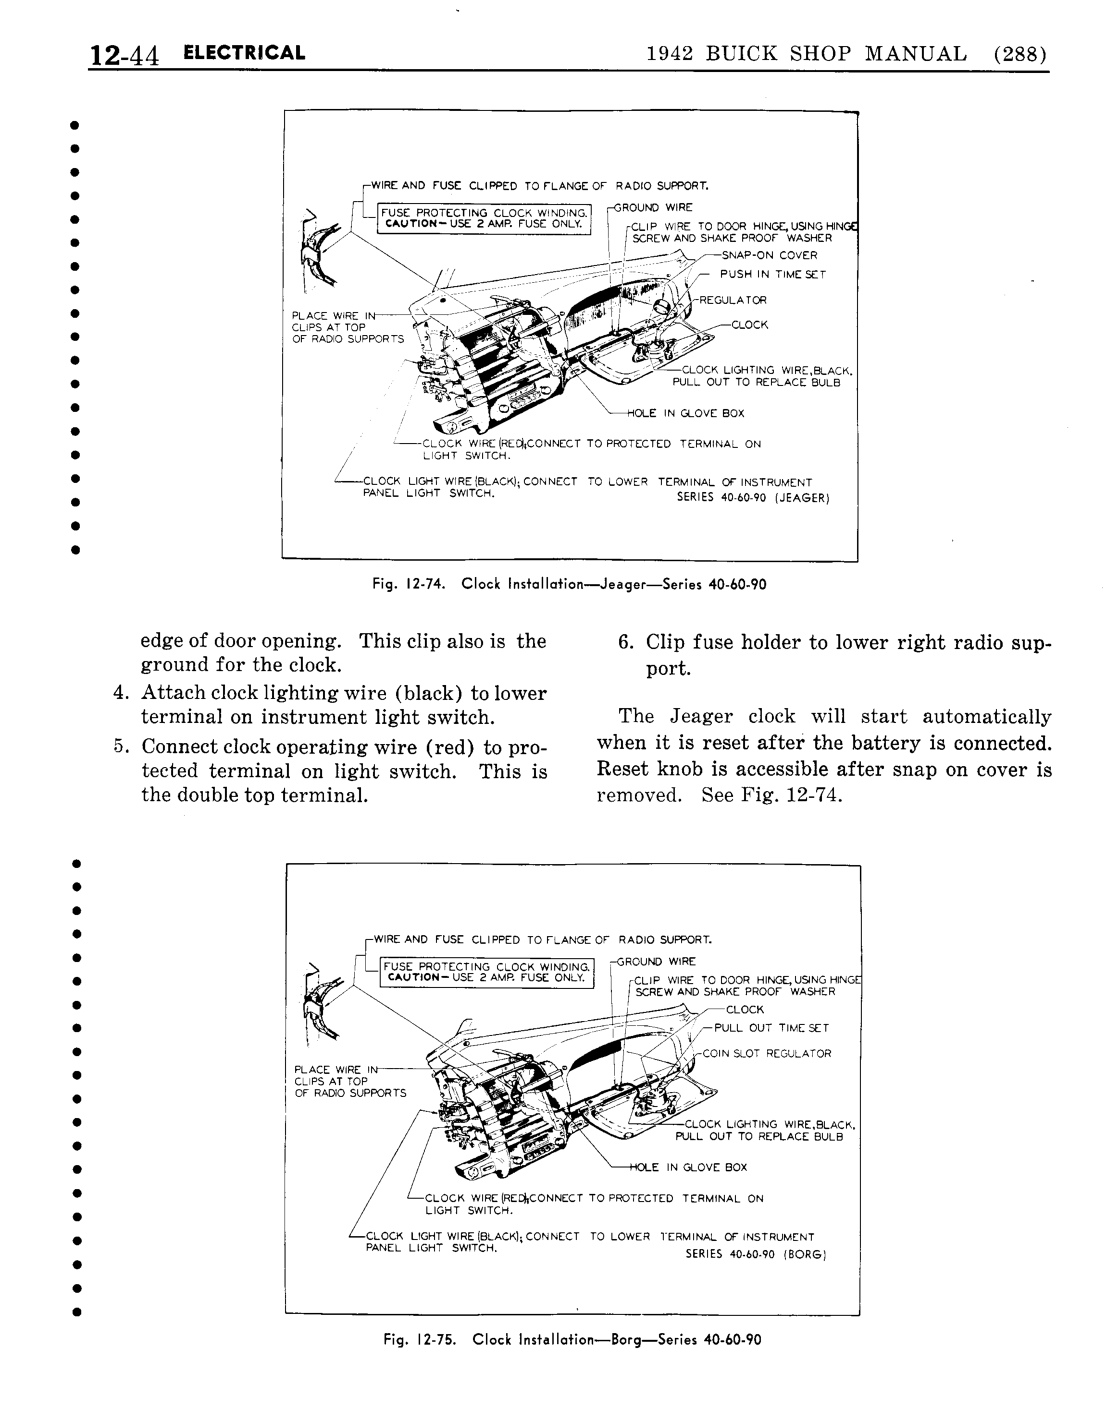 n_13 1942 Buick Shop Manual - Electrical System-044-044.jpg